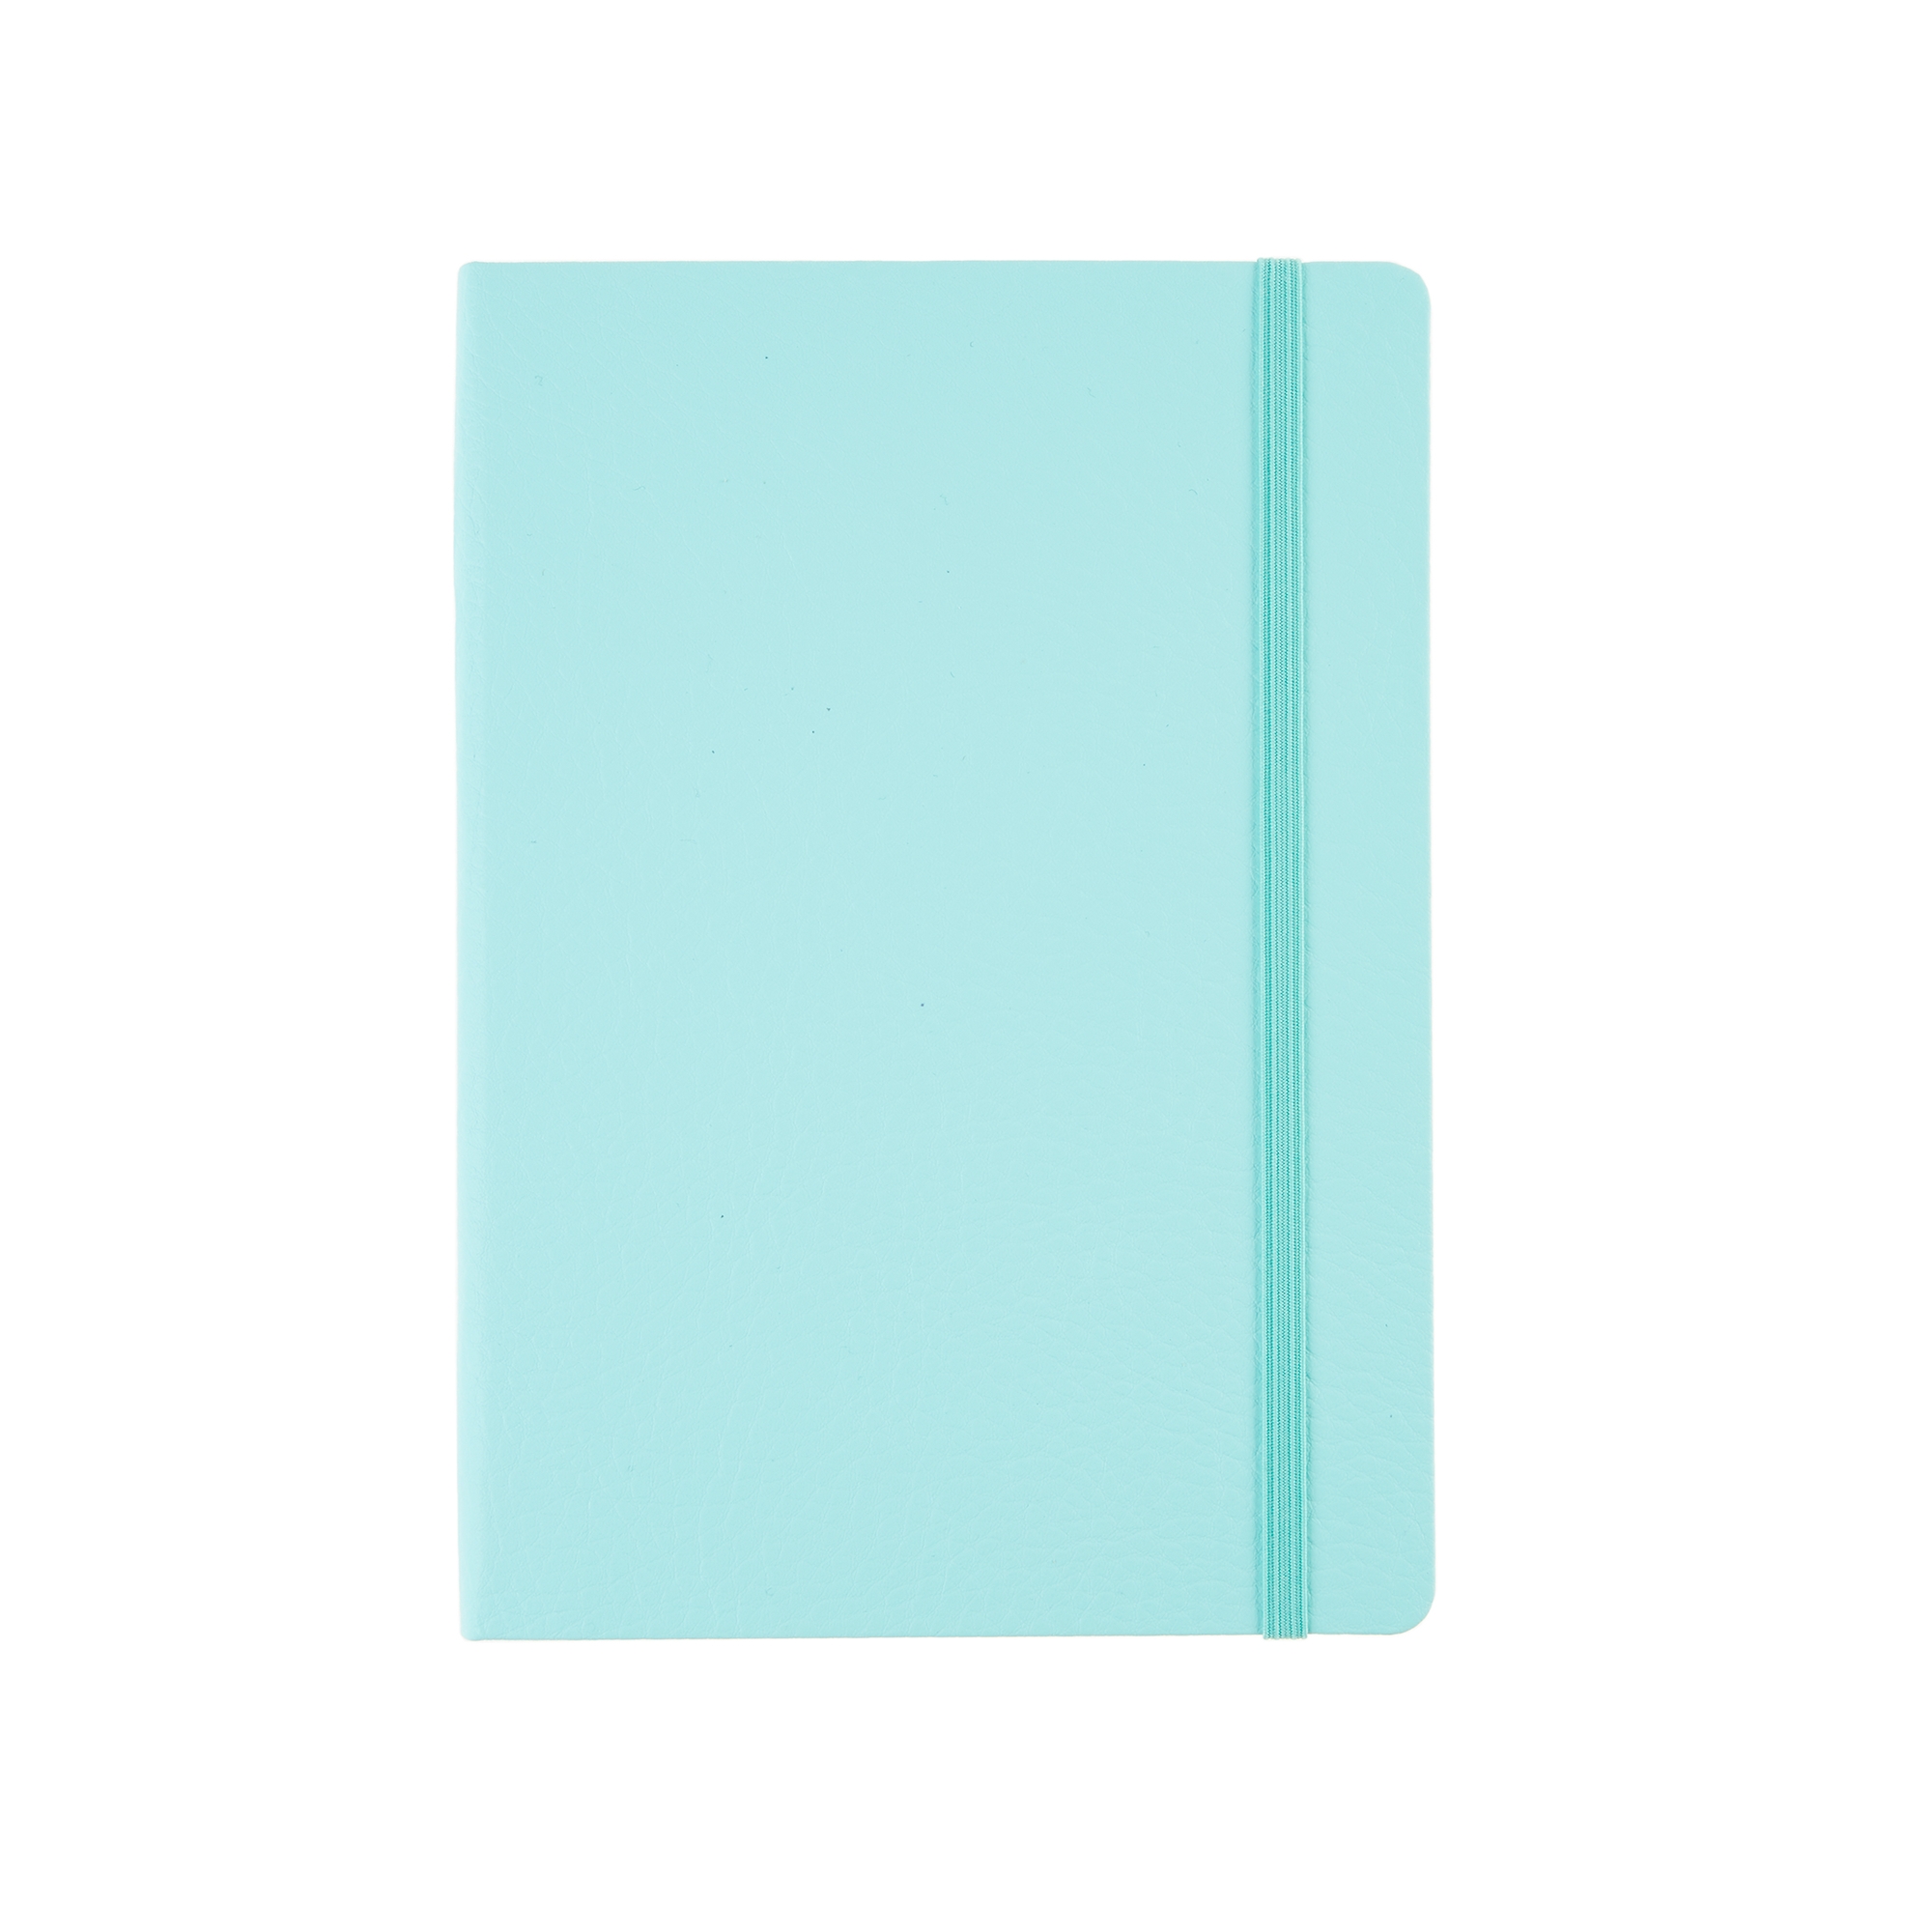 Collins B6 Ruled Notebook - Aquamarine